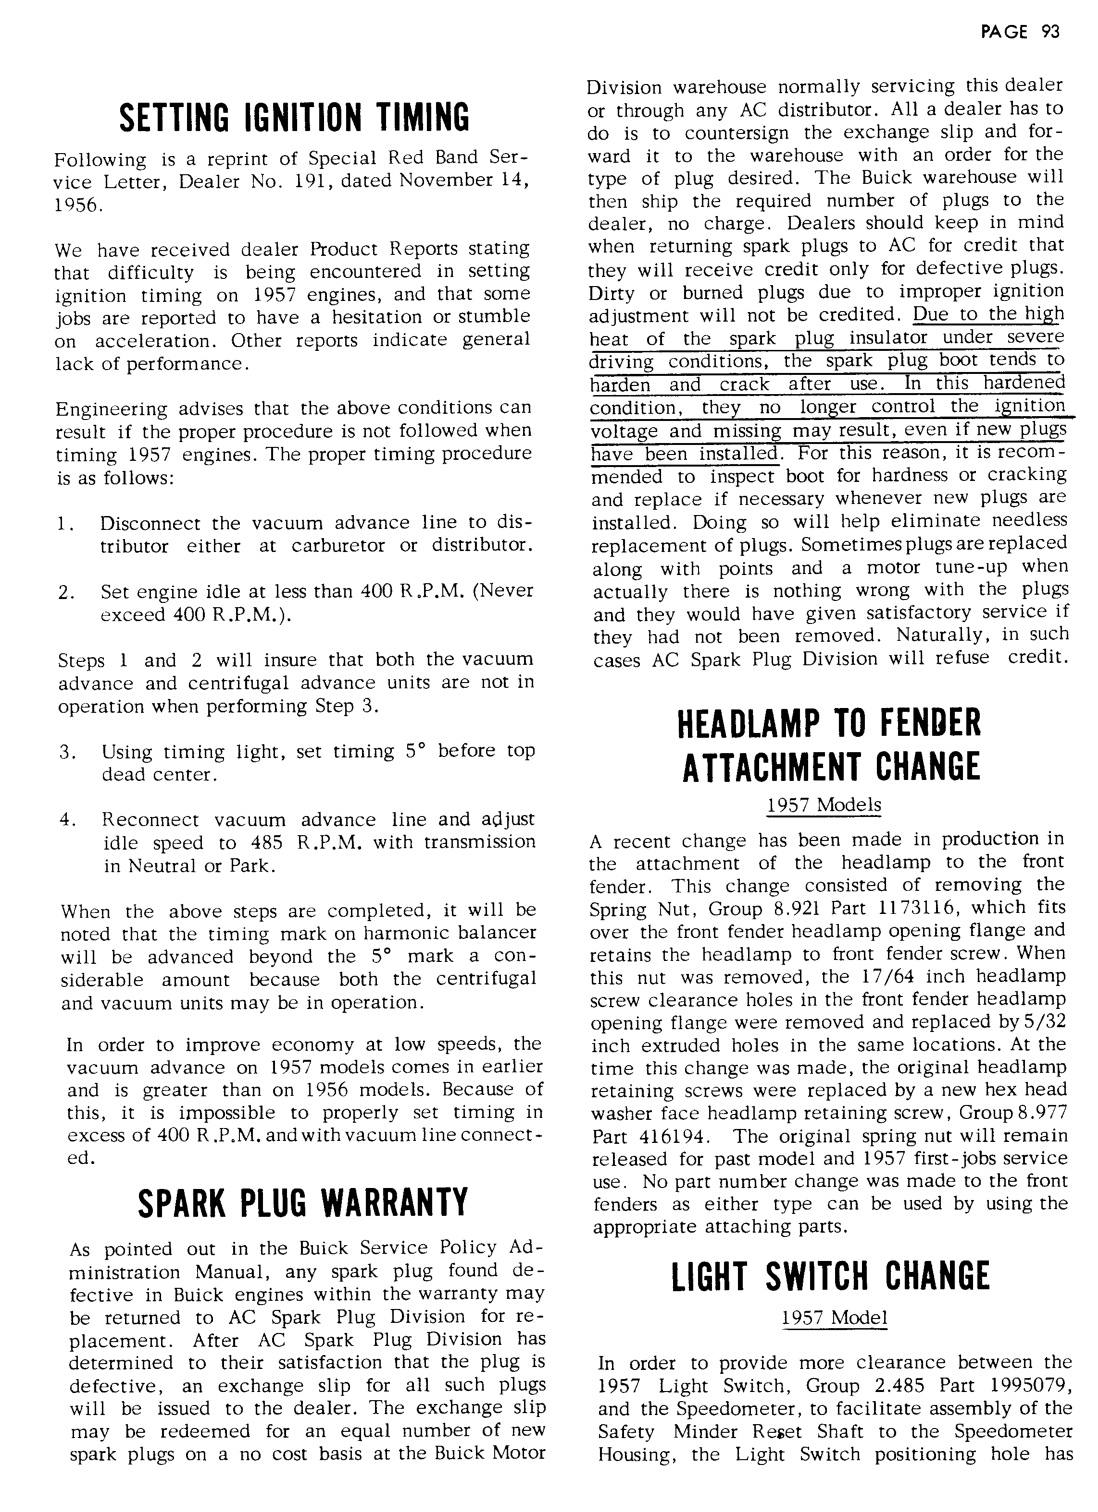 n_1957 Buick Product Service  Bulletins-097-097.jpg